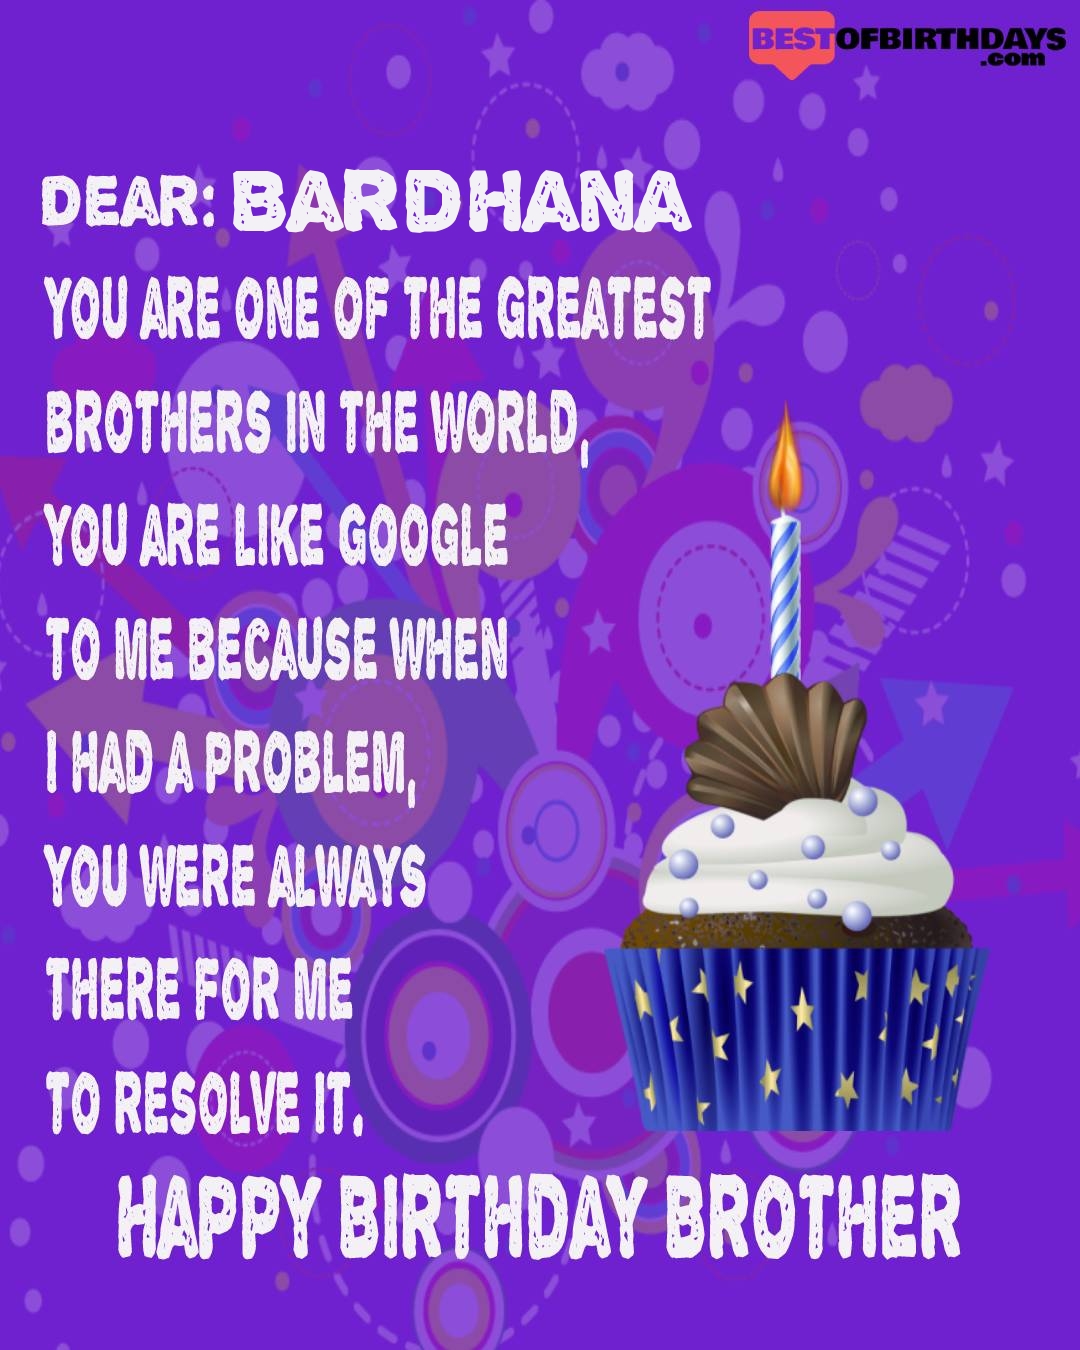 Happy birthday bardhana bhai brother bro